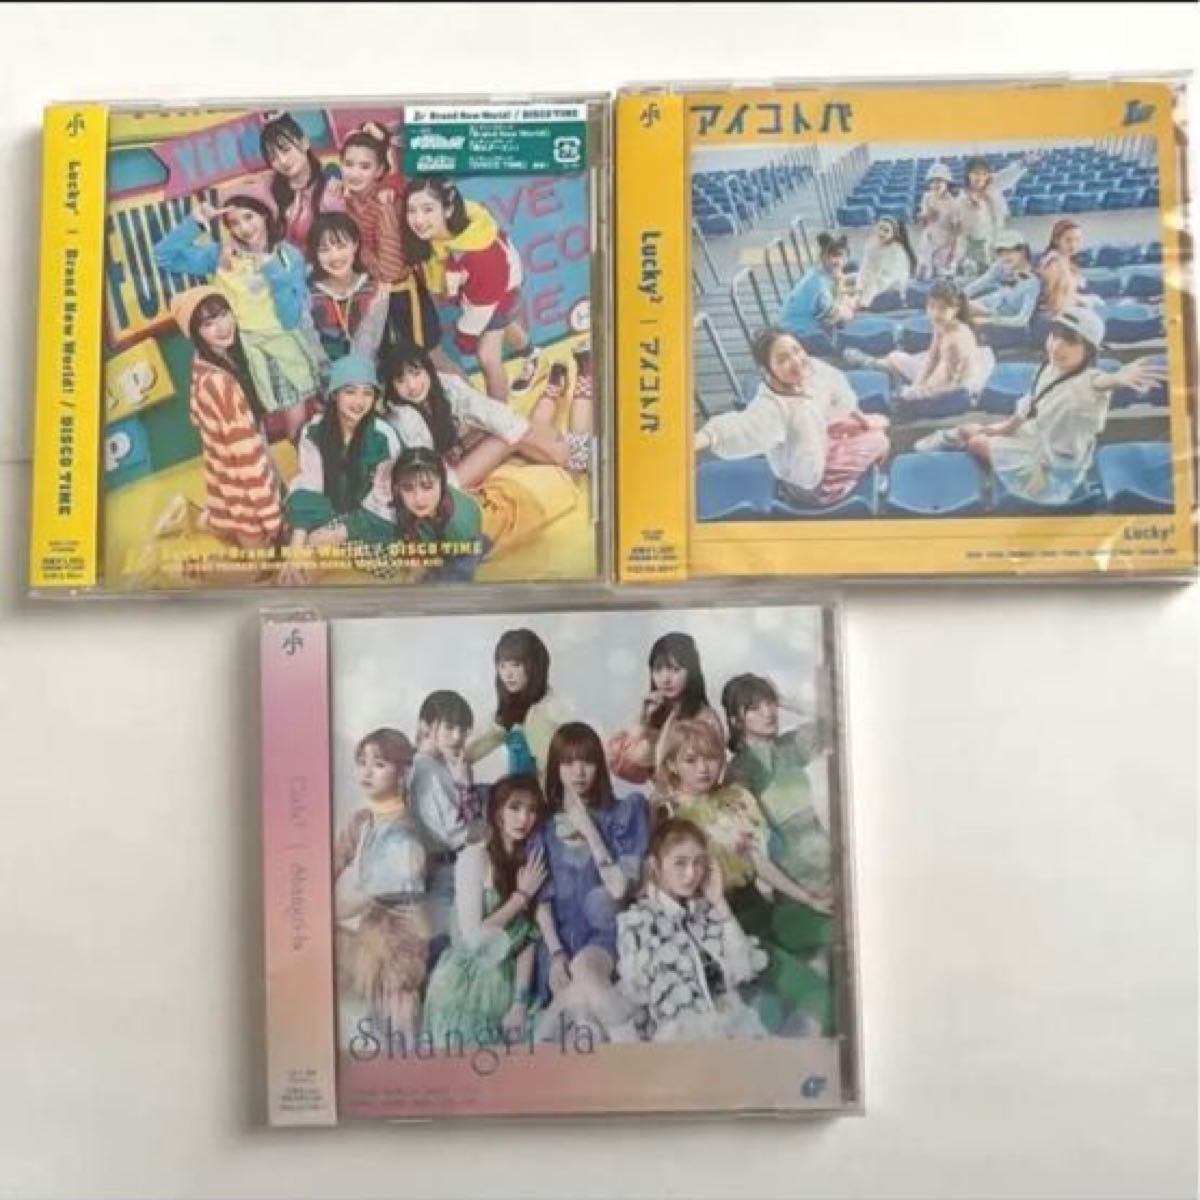 Girls2 Shangri-la Lucky2 アイコトバ 通常盤CD セット